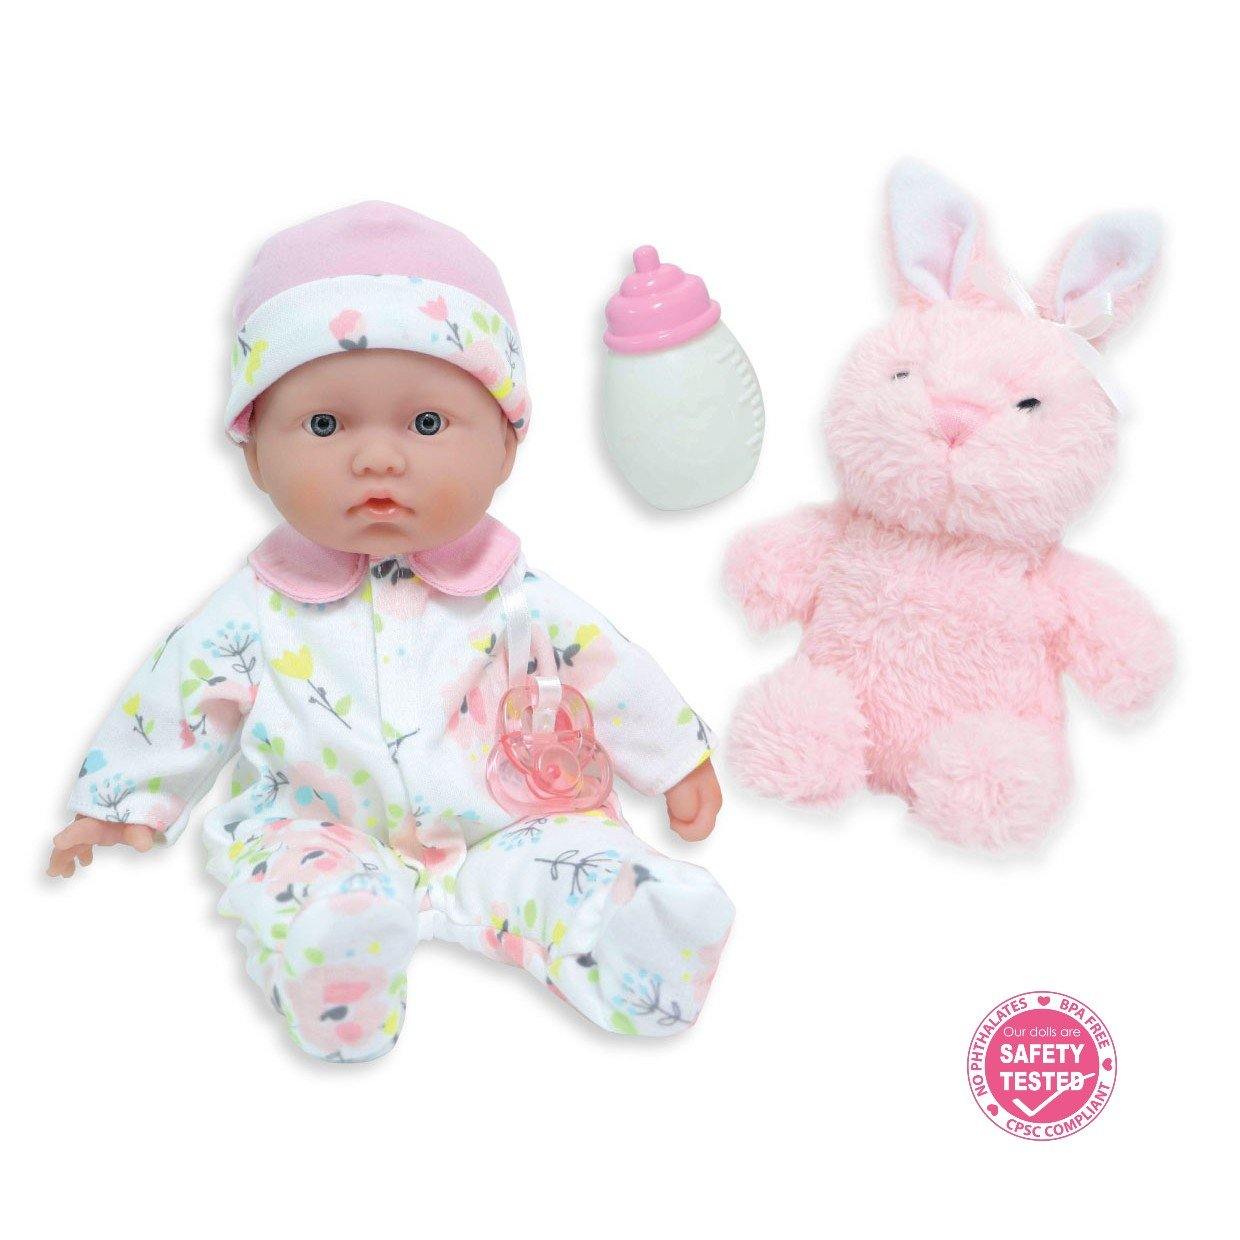 JC Toys, La Baby 11-inch Soft Body Play Doll Body Travel Case Gift Set, Pink. - JC Toys Group Inc.